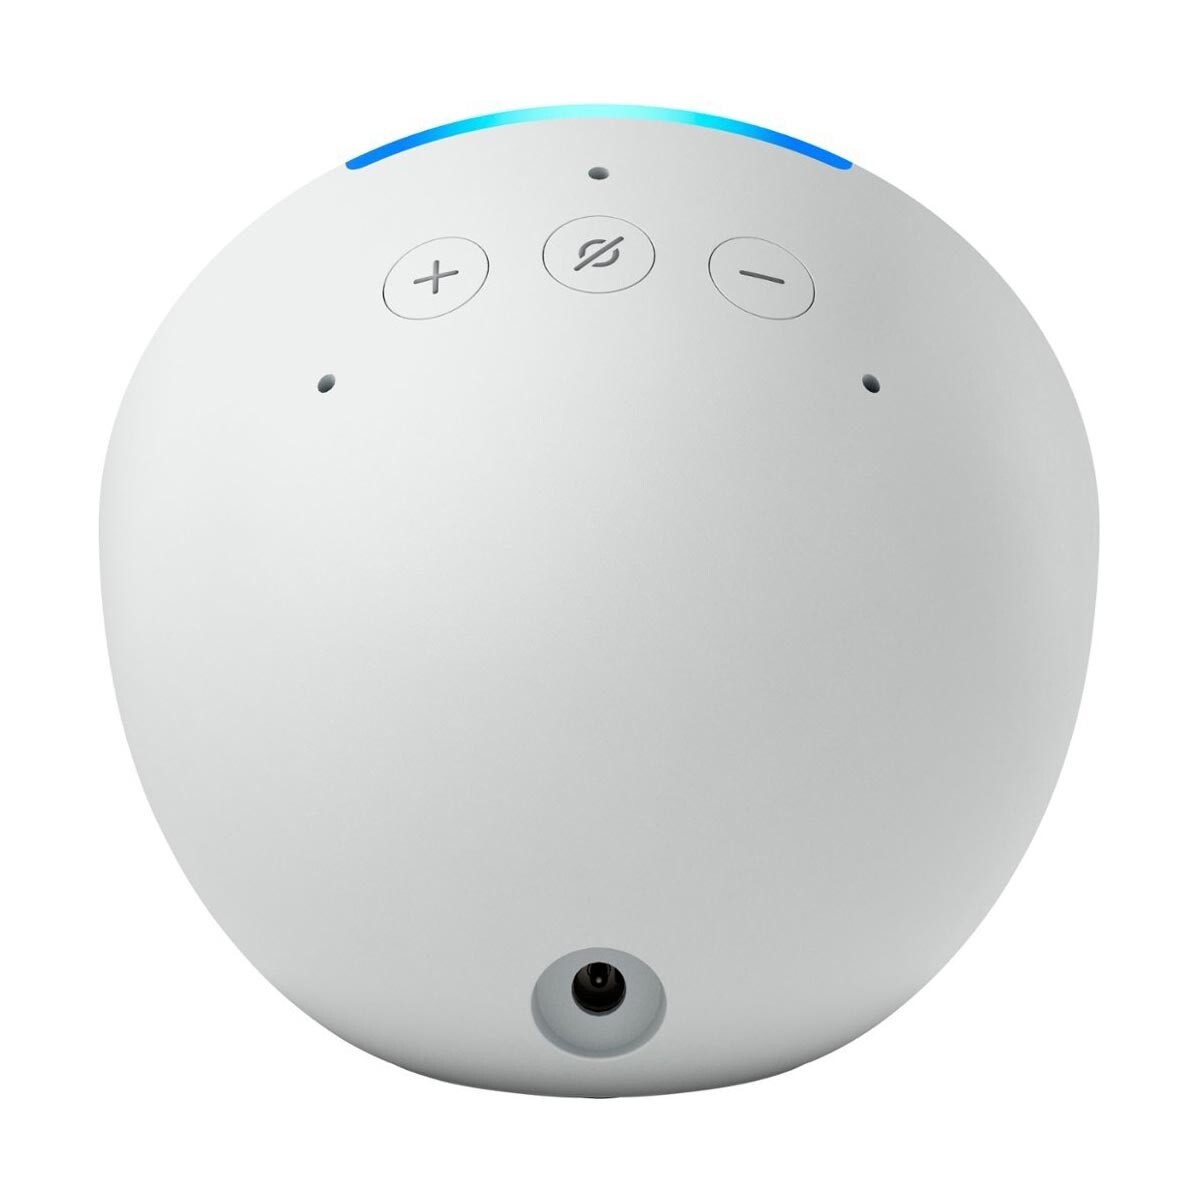 Parlante Smart Amazon Echo Pop (1st Gen) C/ Asistente Virtual Alexa White